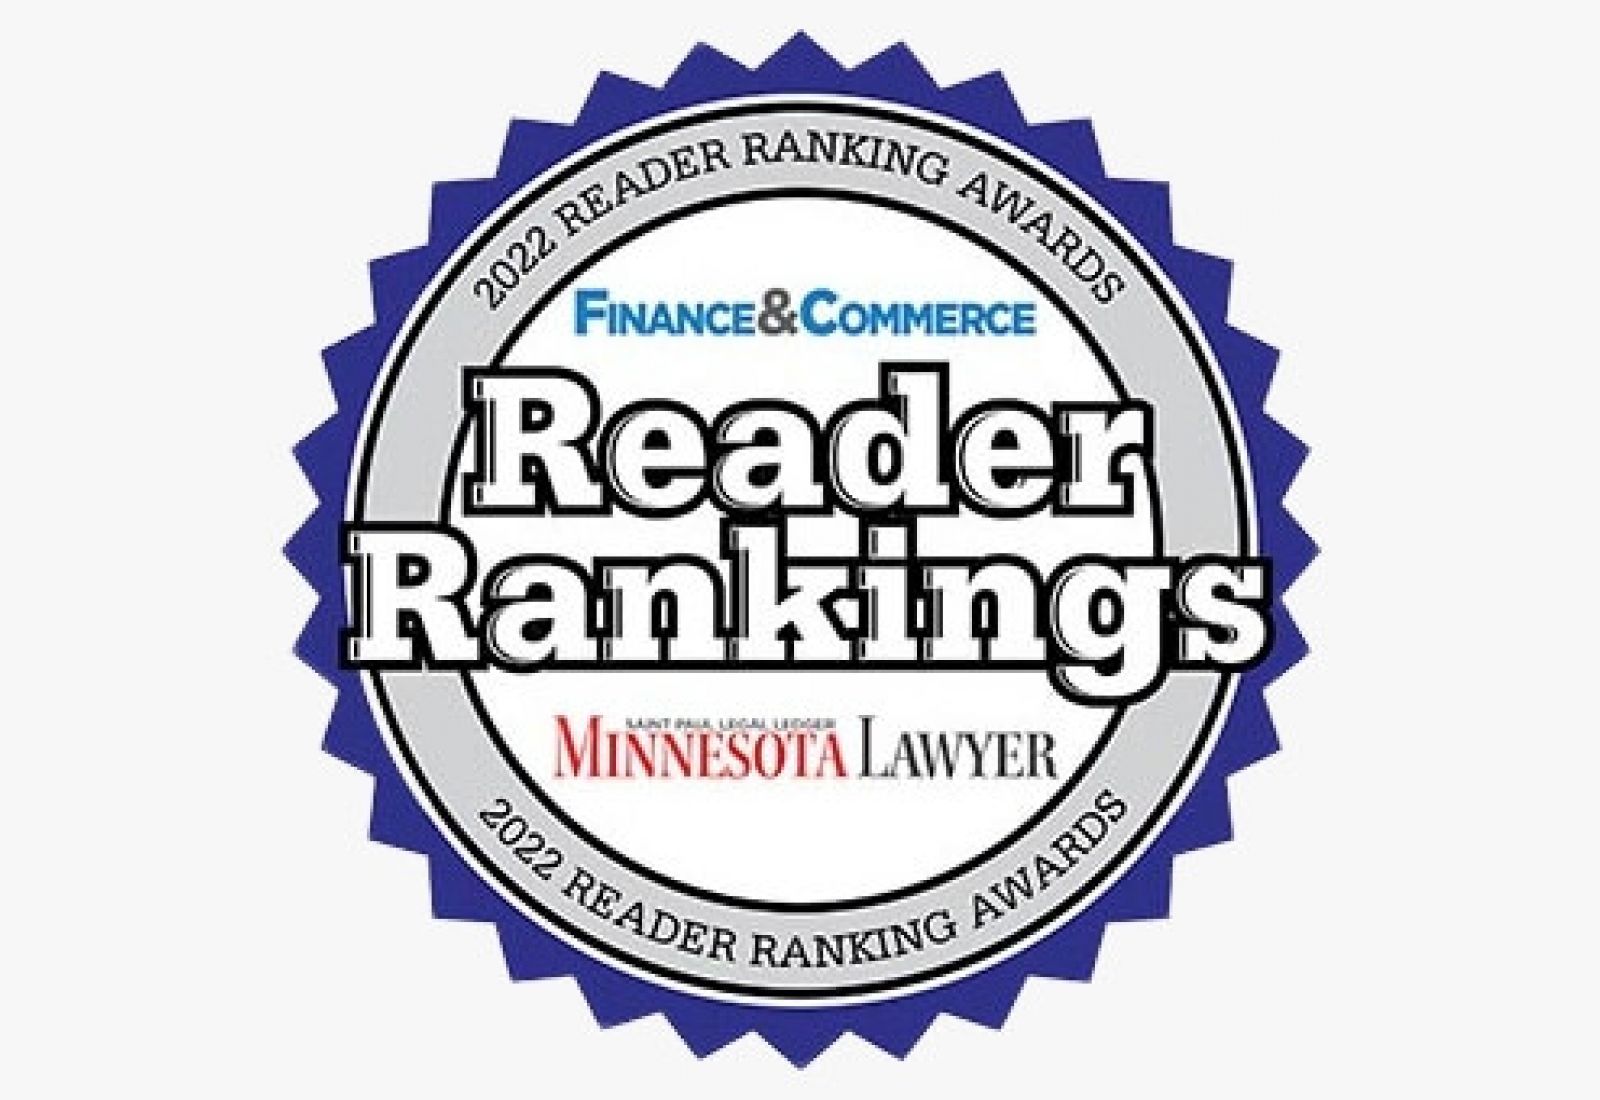 Finance & Commerce Reader Rankings graphic badge